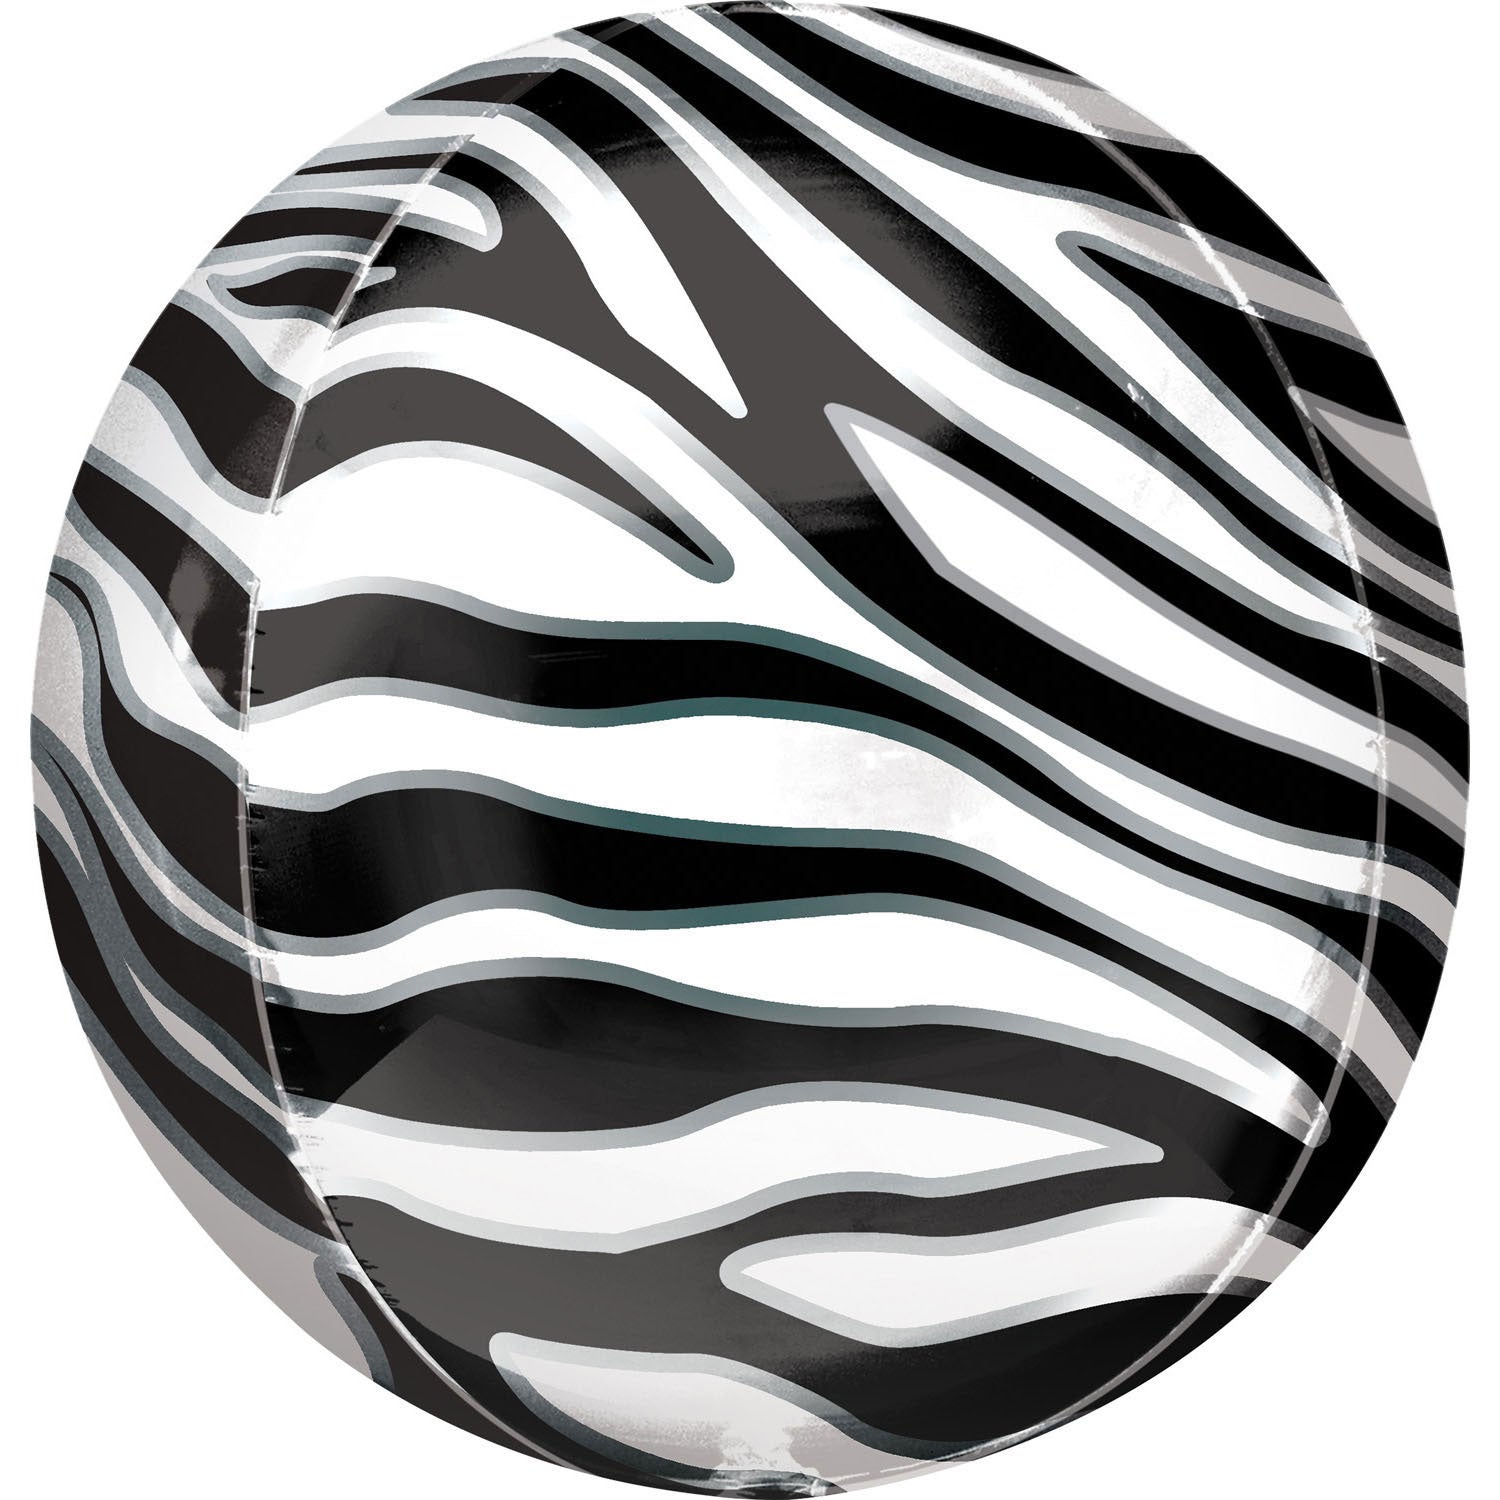 Spherical balloon with zebra skin design